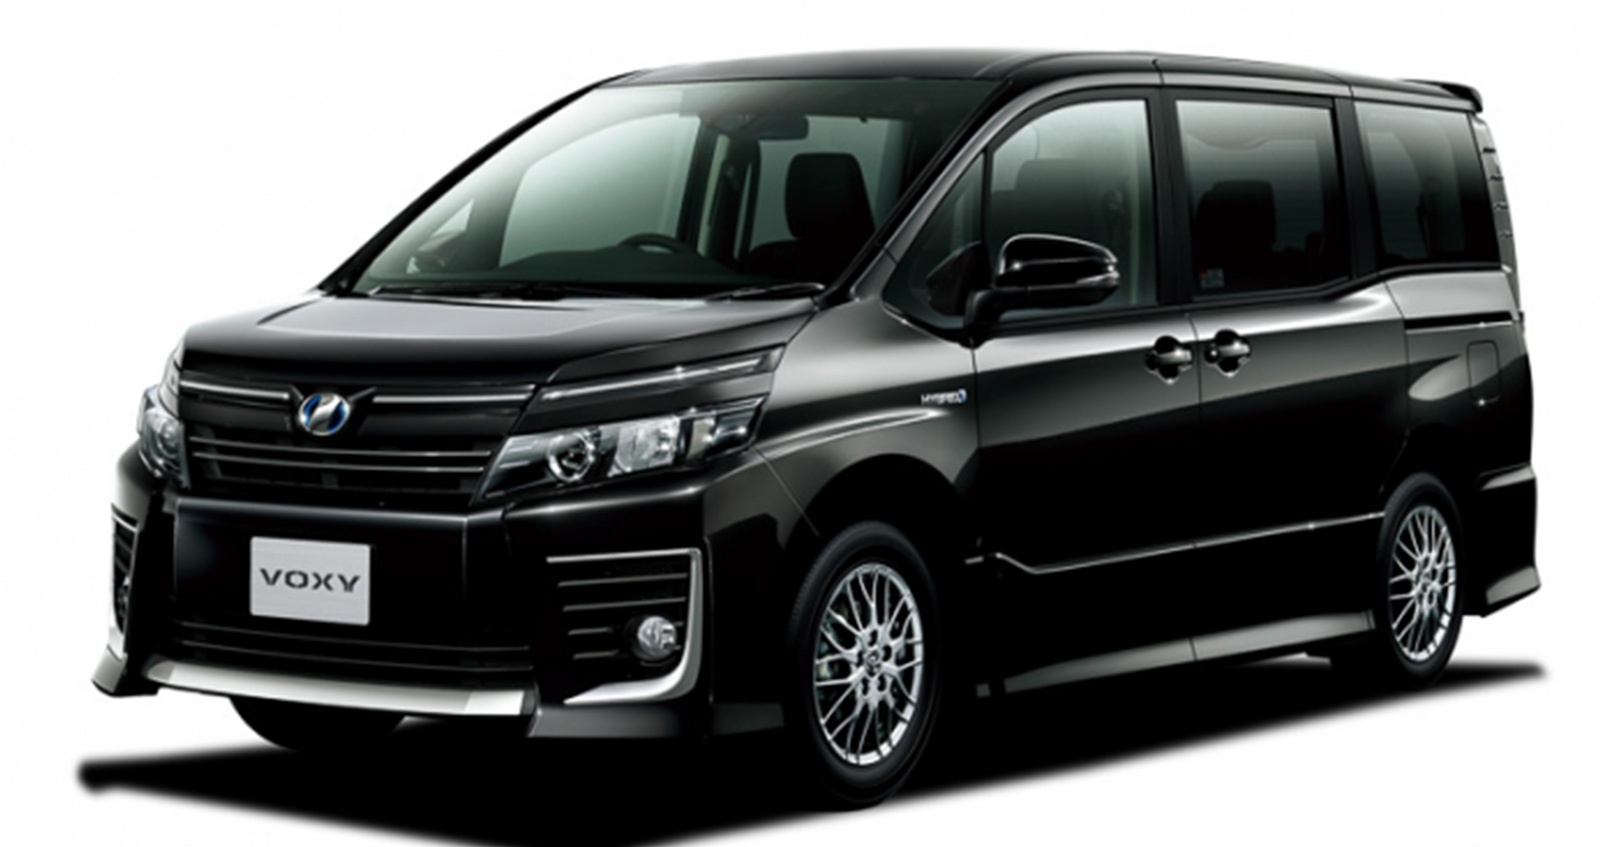 Toyota VOXY MPV ใหม่ เตรียมปรับปรุง 27 เมษายน 2563 ในญี่ปุ่น